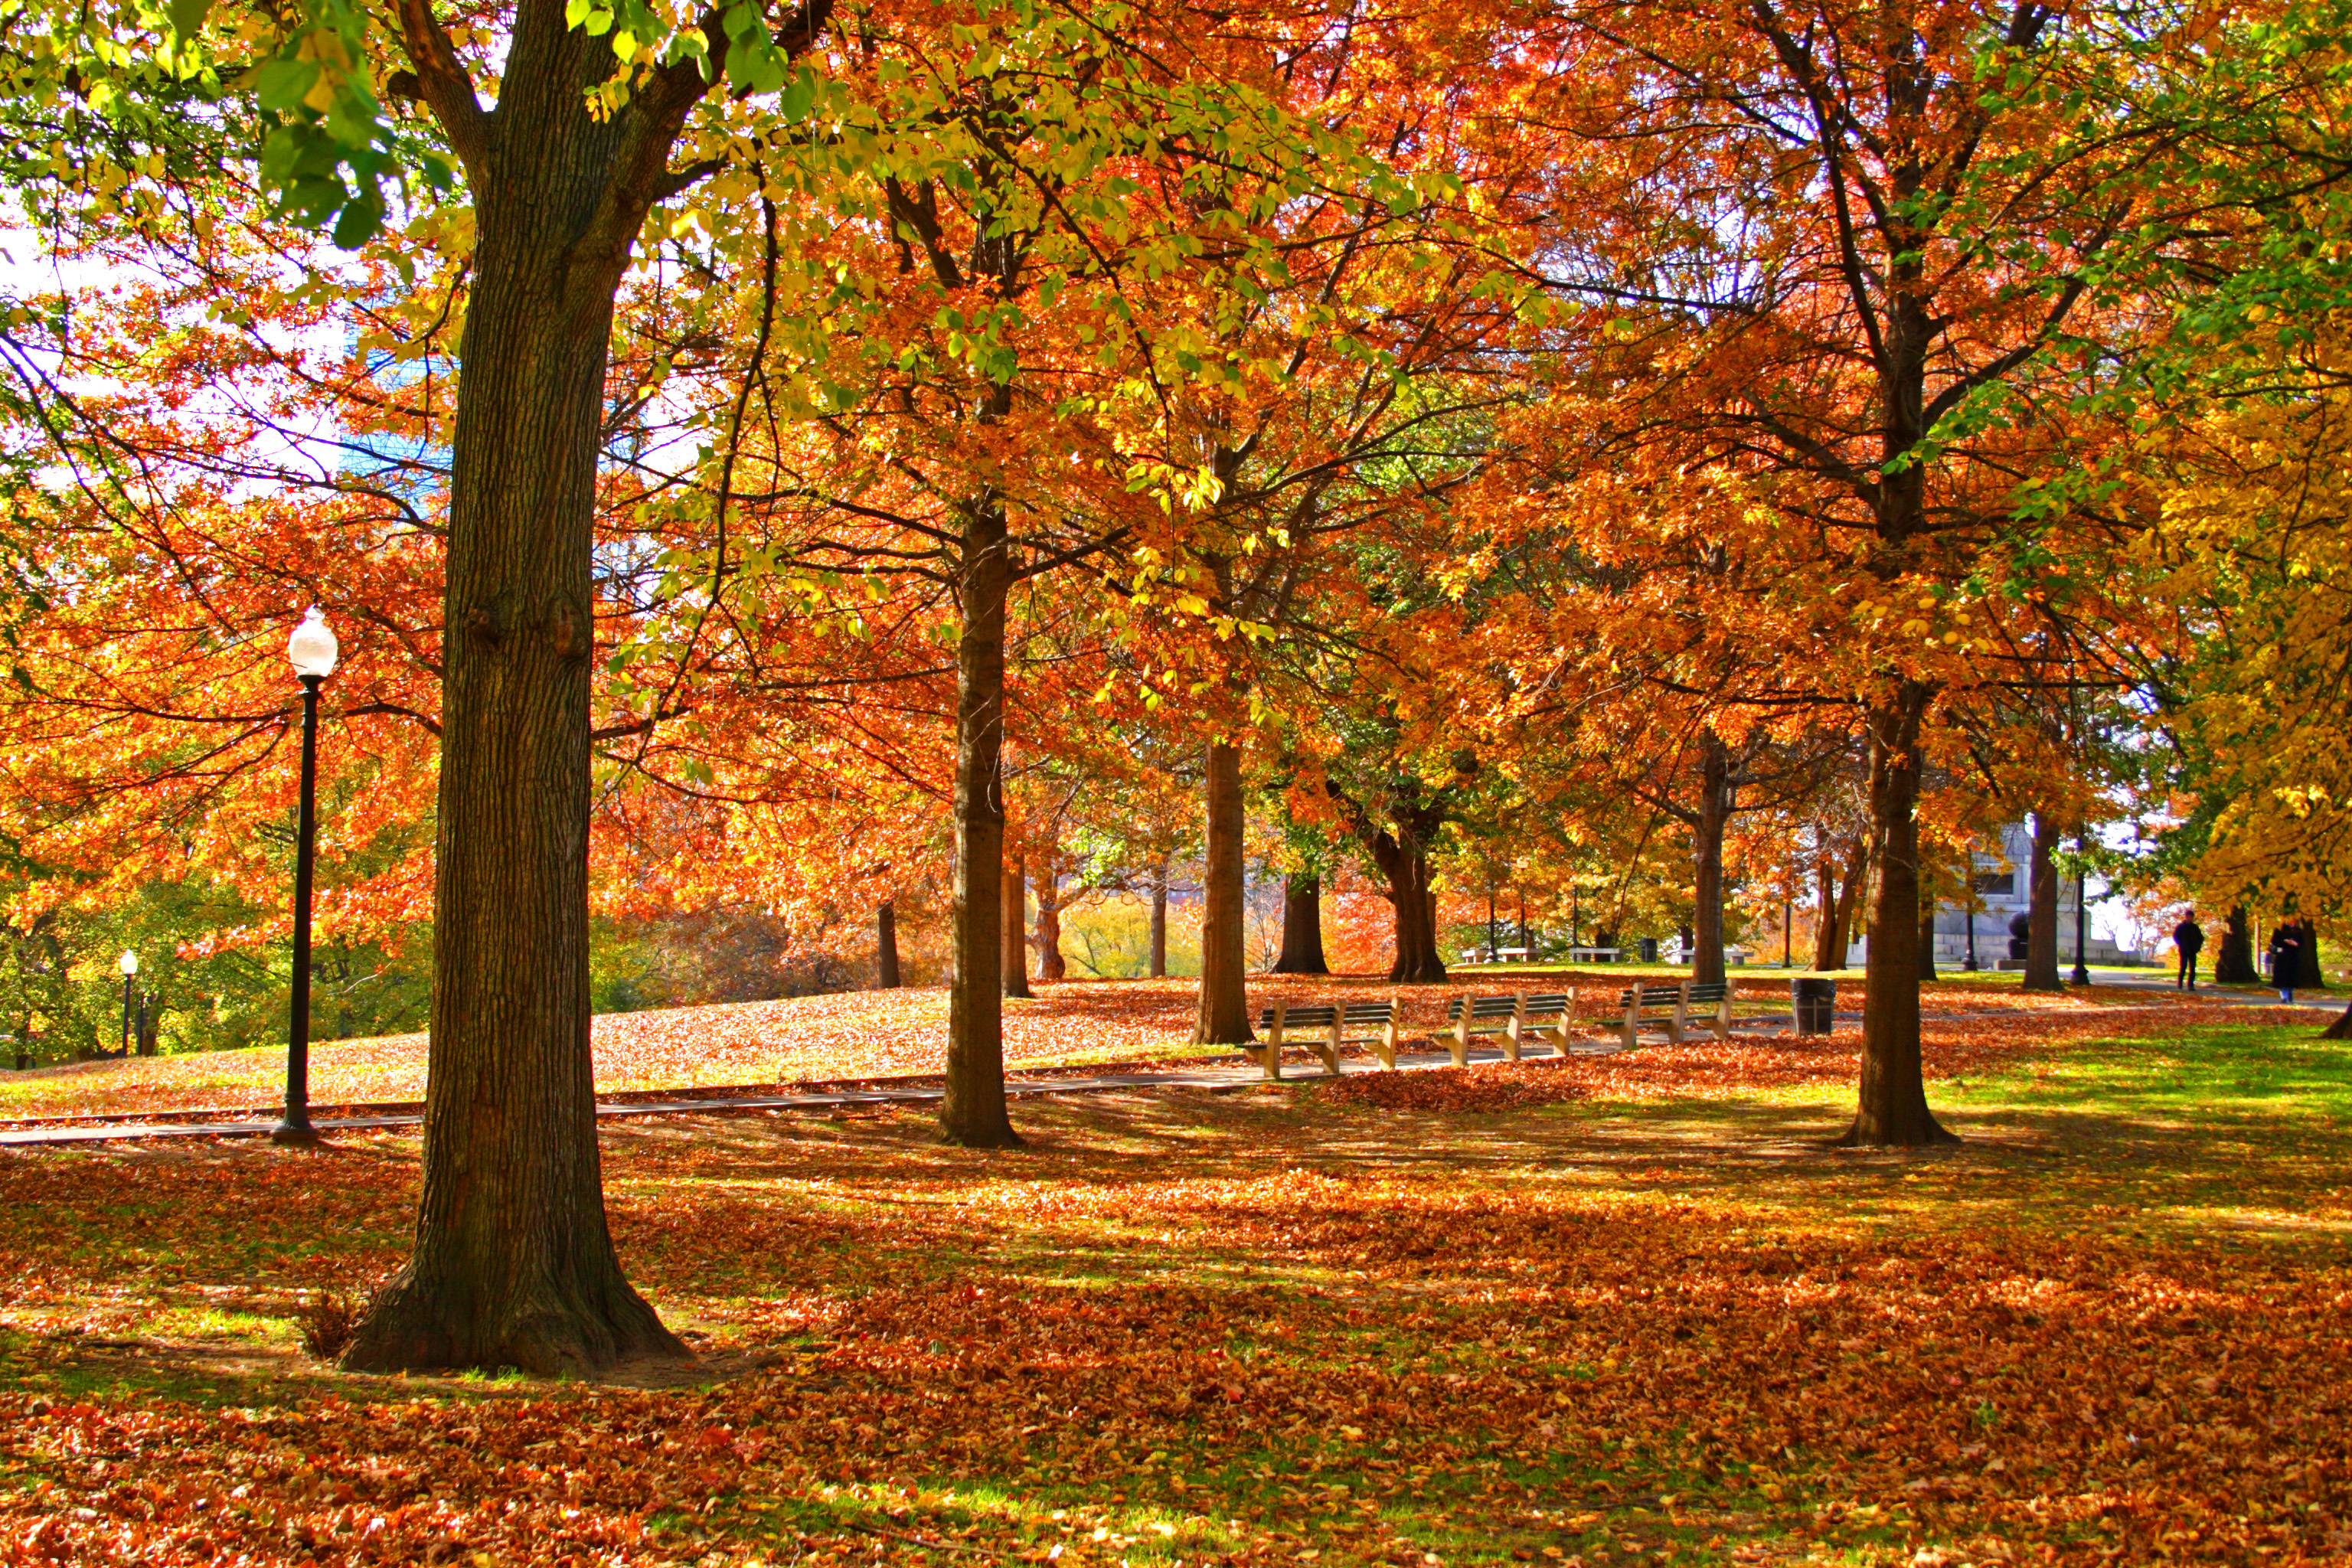 Autumn in Boston | Source: Shutterstock